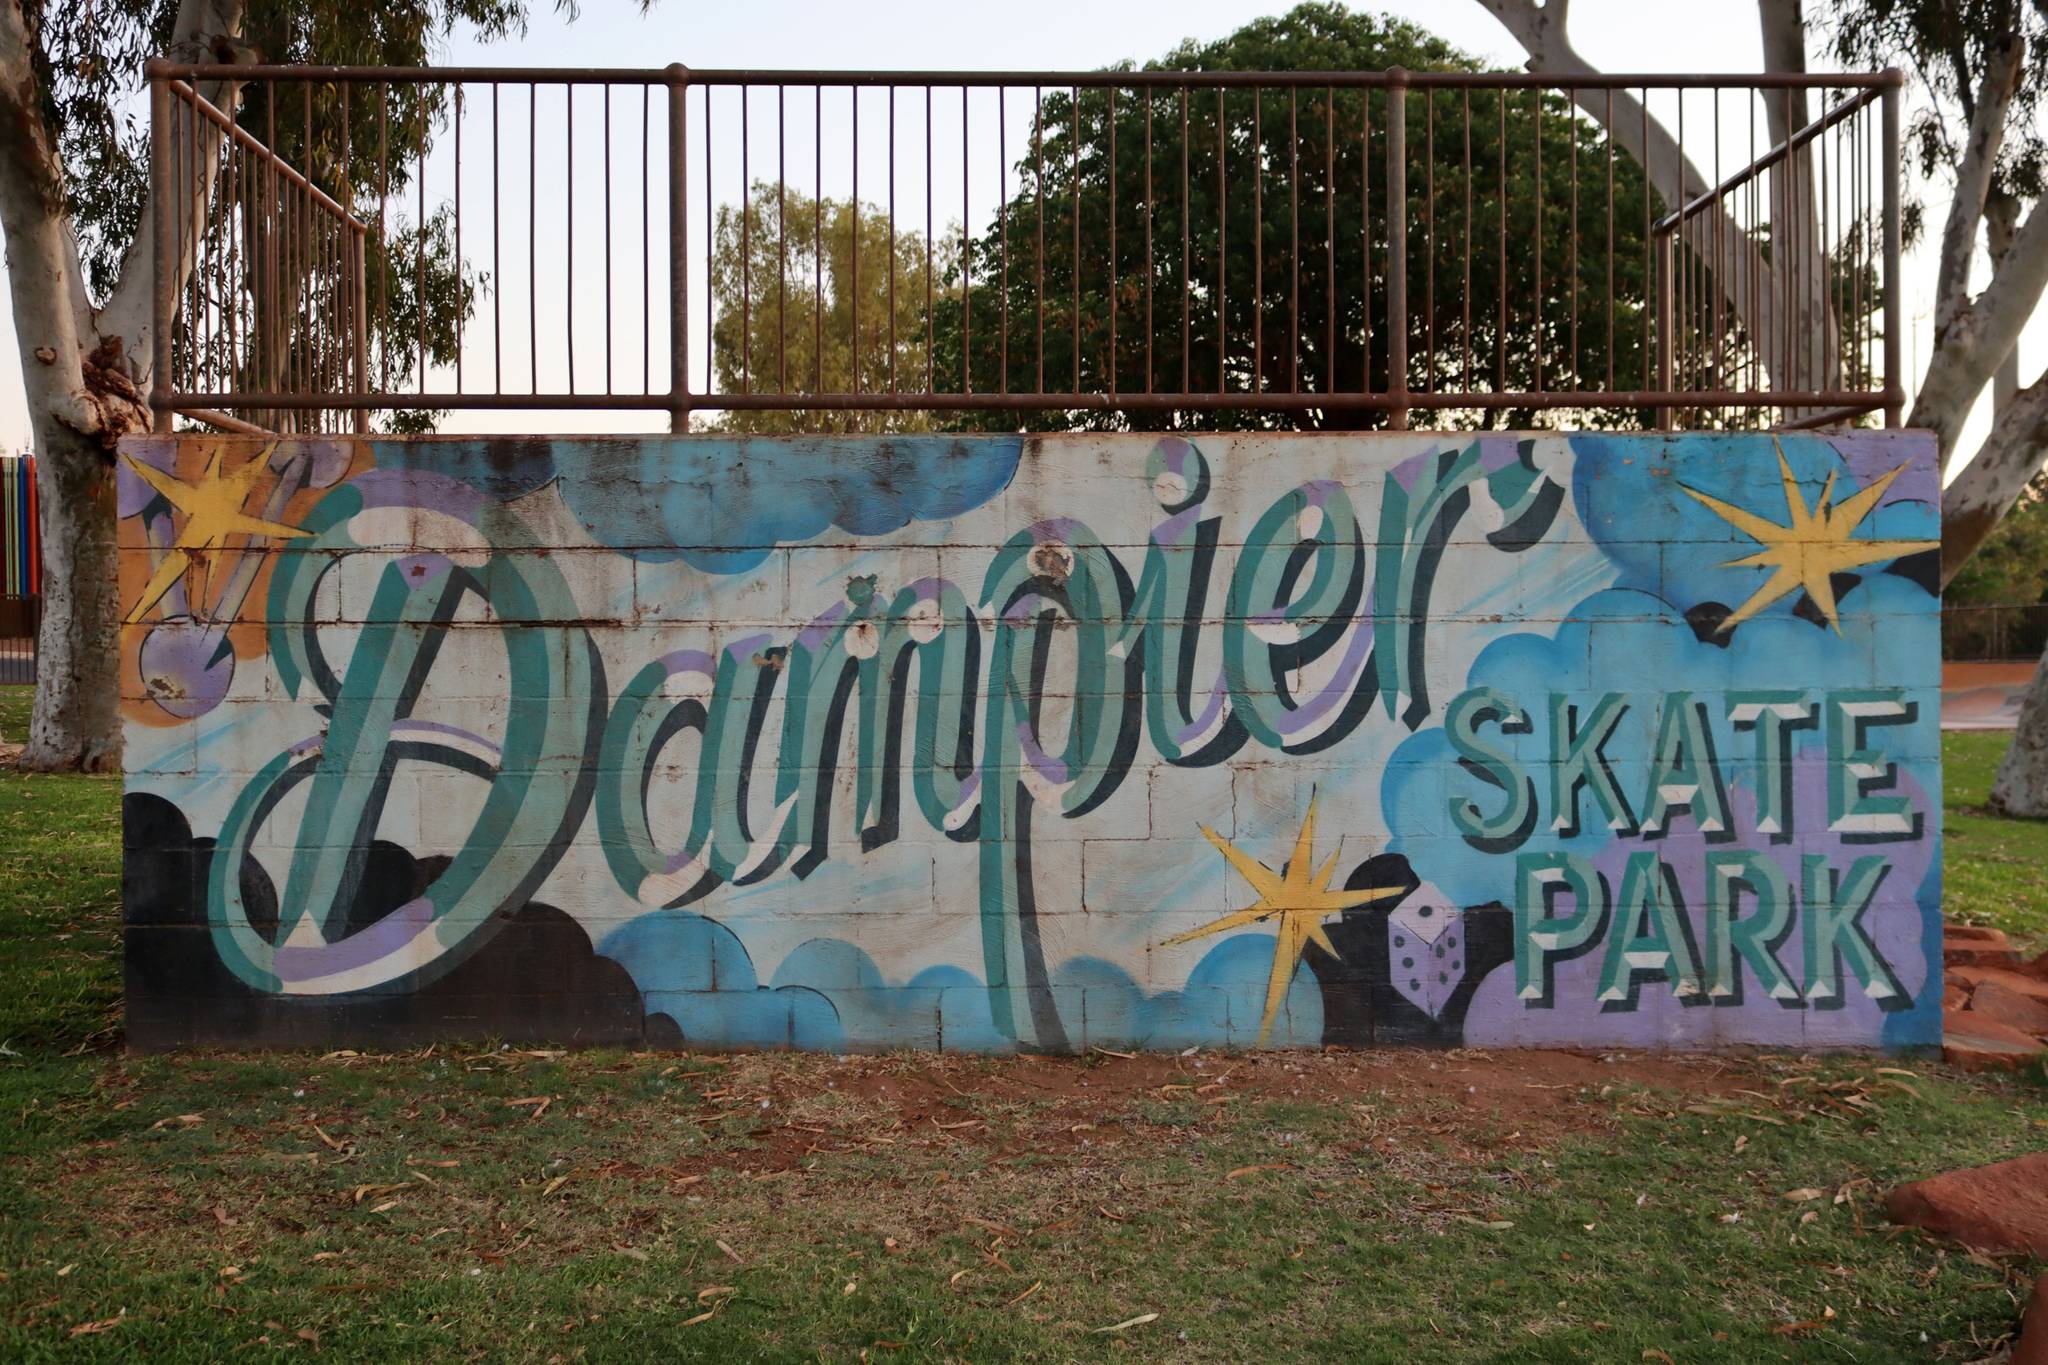 George Domahidy&mdash;Dampier Skate Park